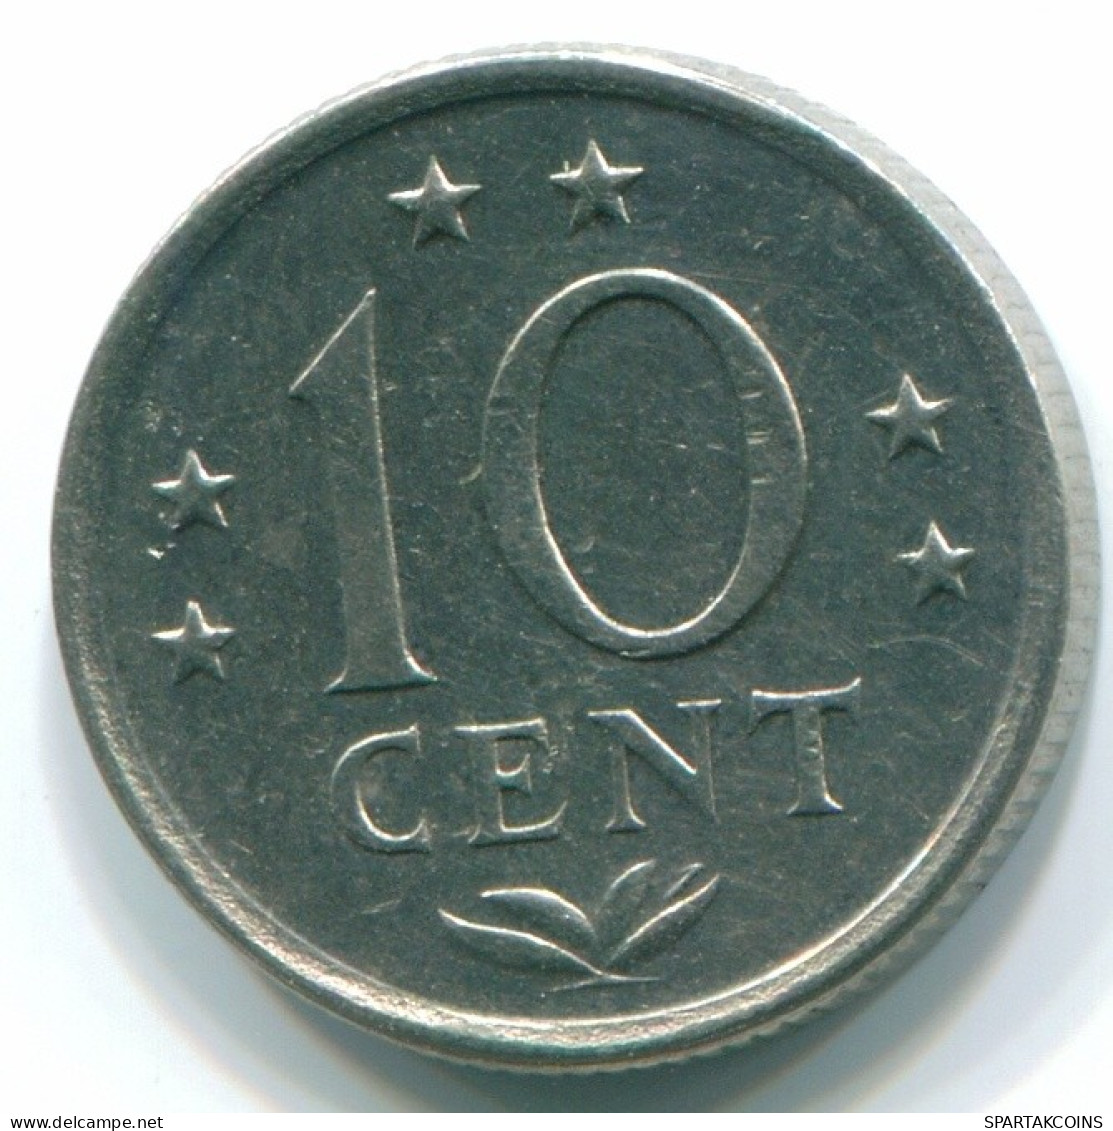 10 CENTS 1970 NIEDERLÄNDISCHE ANTILLEN Nickel Koloniale Münze #S13368.D.A - Netherlands Antilles